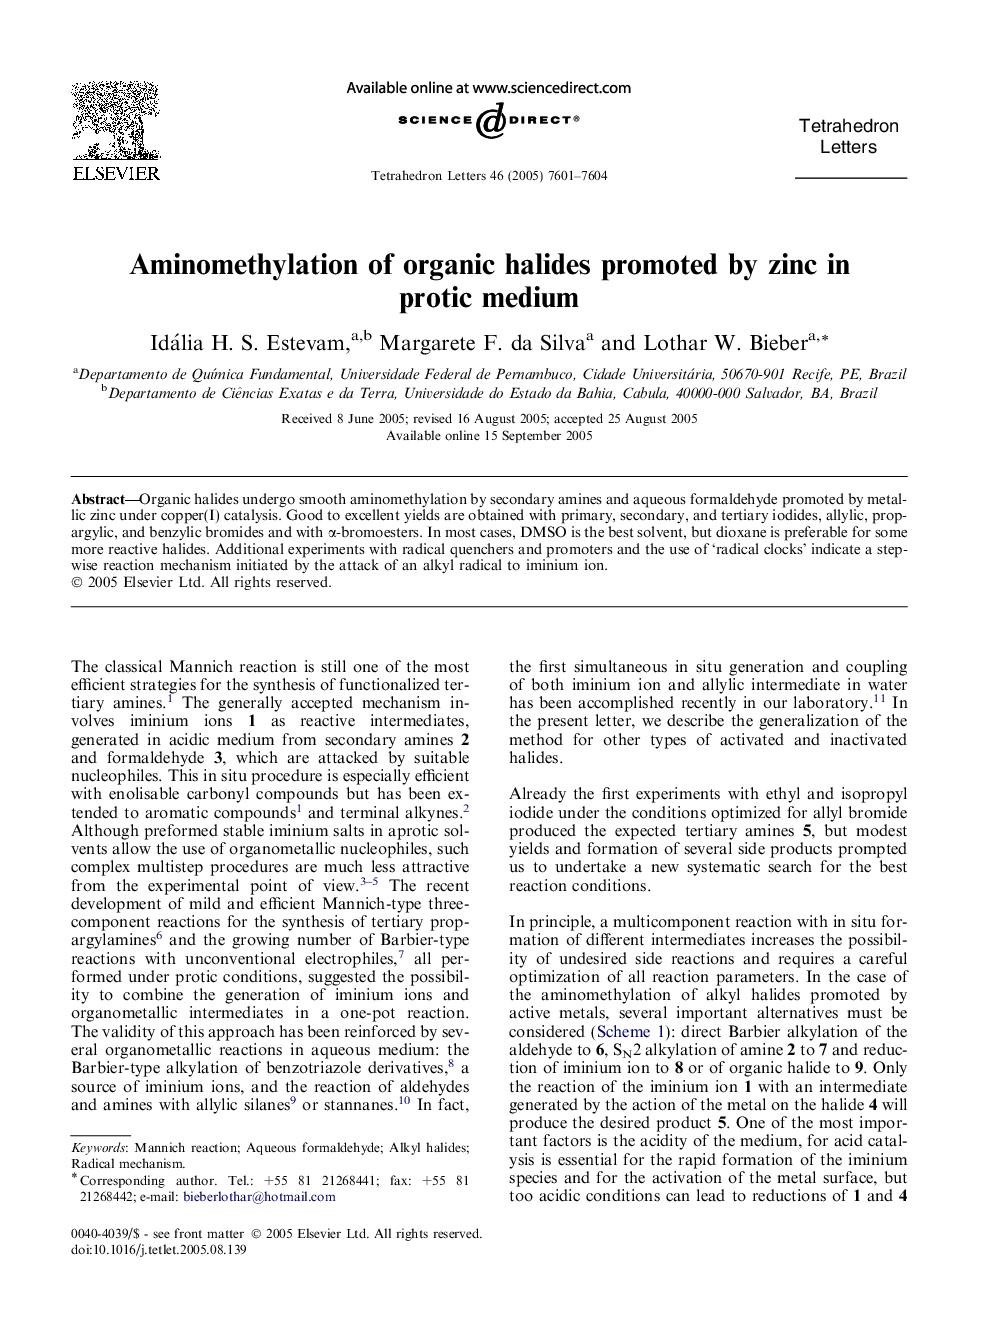 Aminomethylation of organic halides promoted by zinc in protic medium